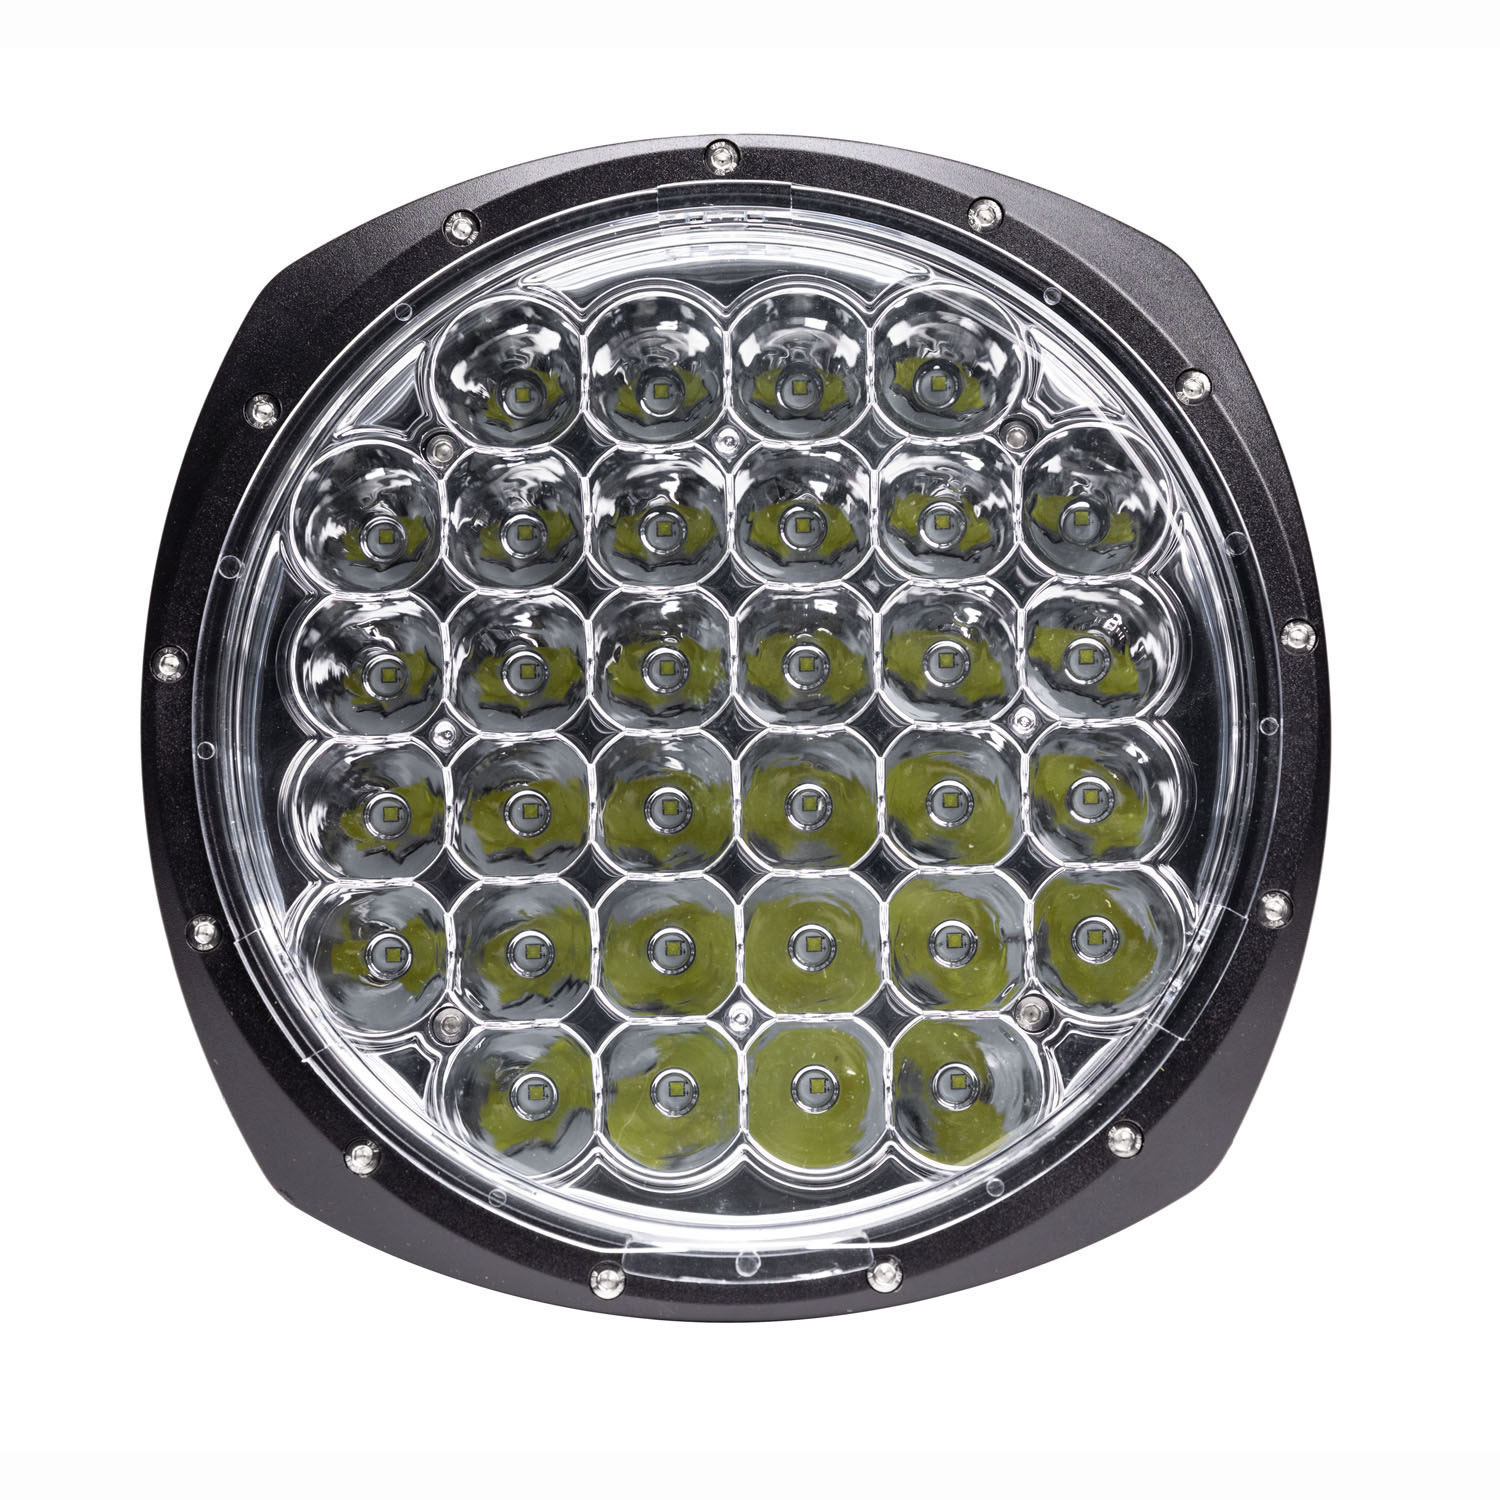 ATO9RV1 Round LED Lights – 9 Inch